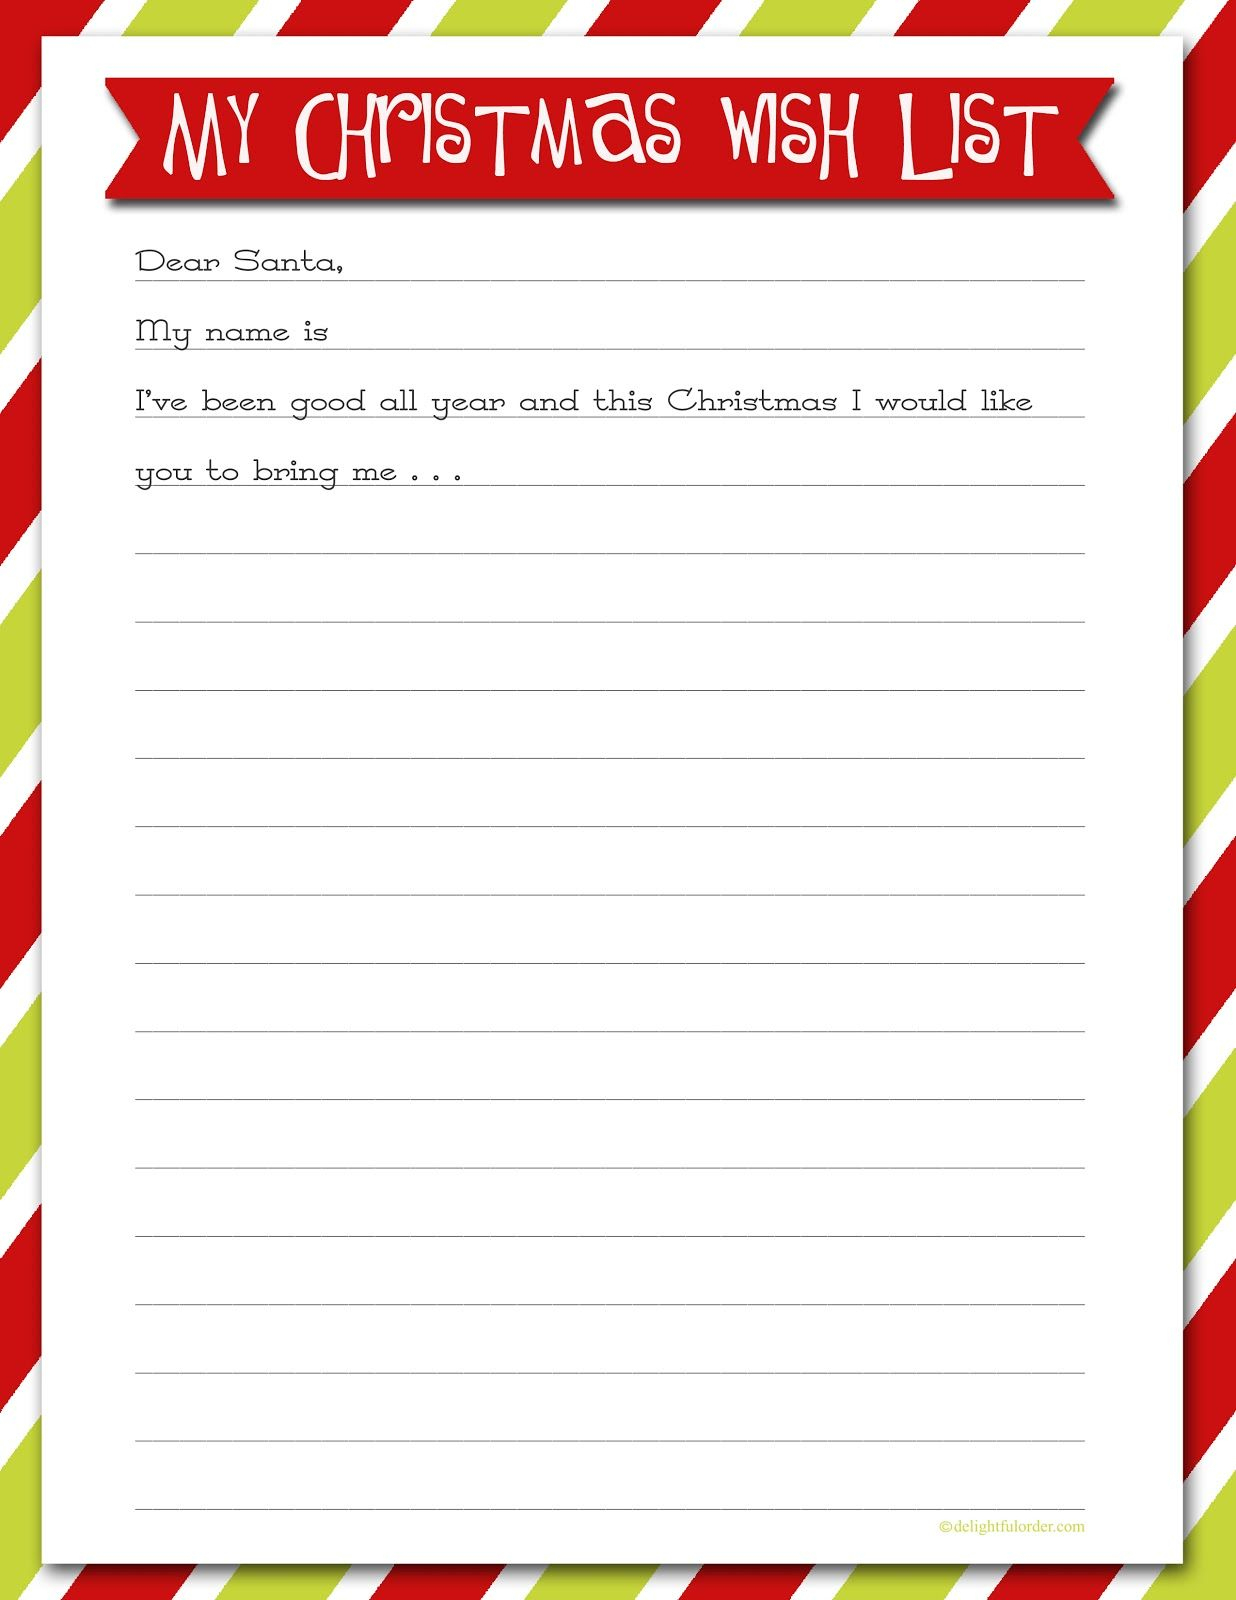 Delightful Order: Christmas Wish List - Free Printable | Delightful - Free Printable Christmas Wish List